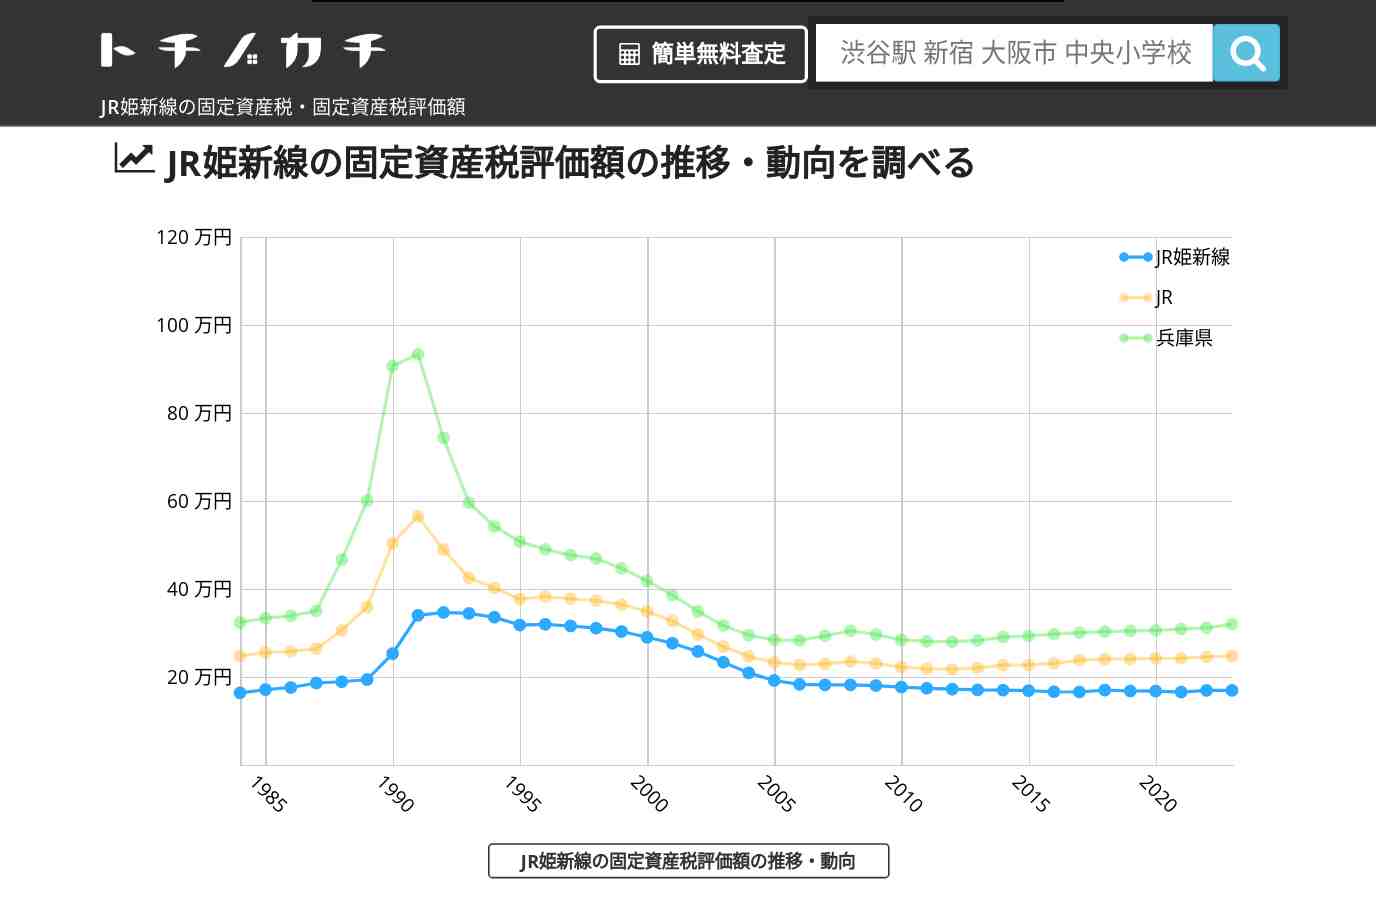 JR姫新線(JR)の固定資産税・固定資産税評価額 | トチノカチ